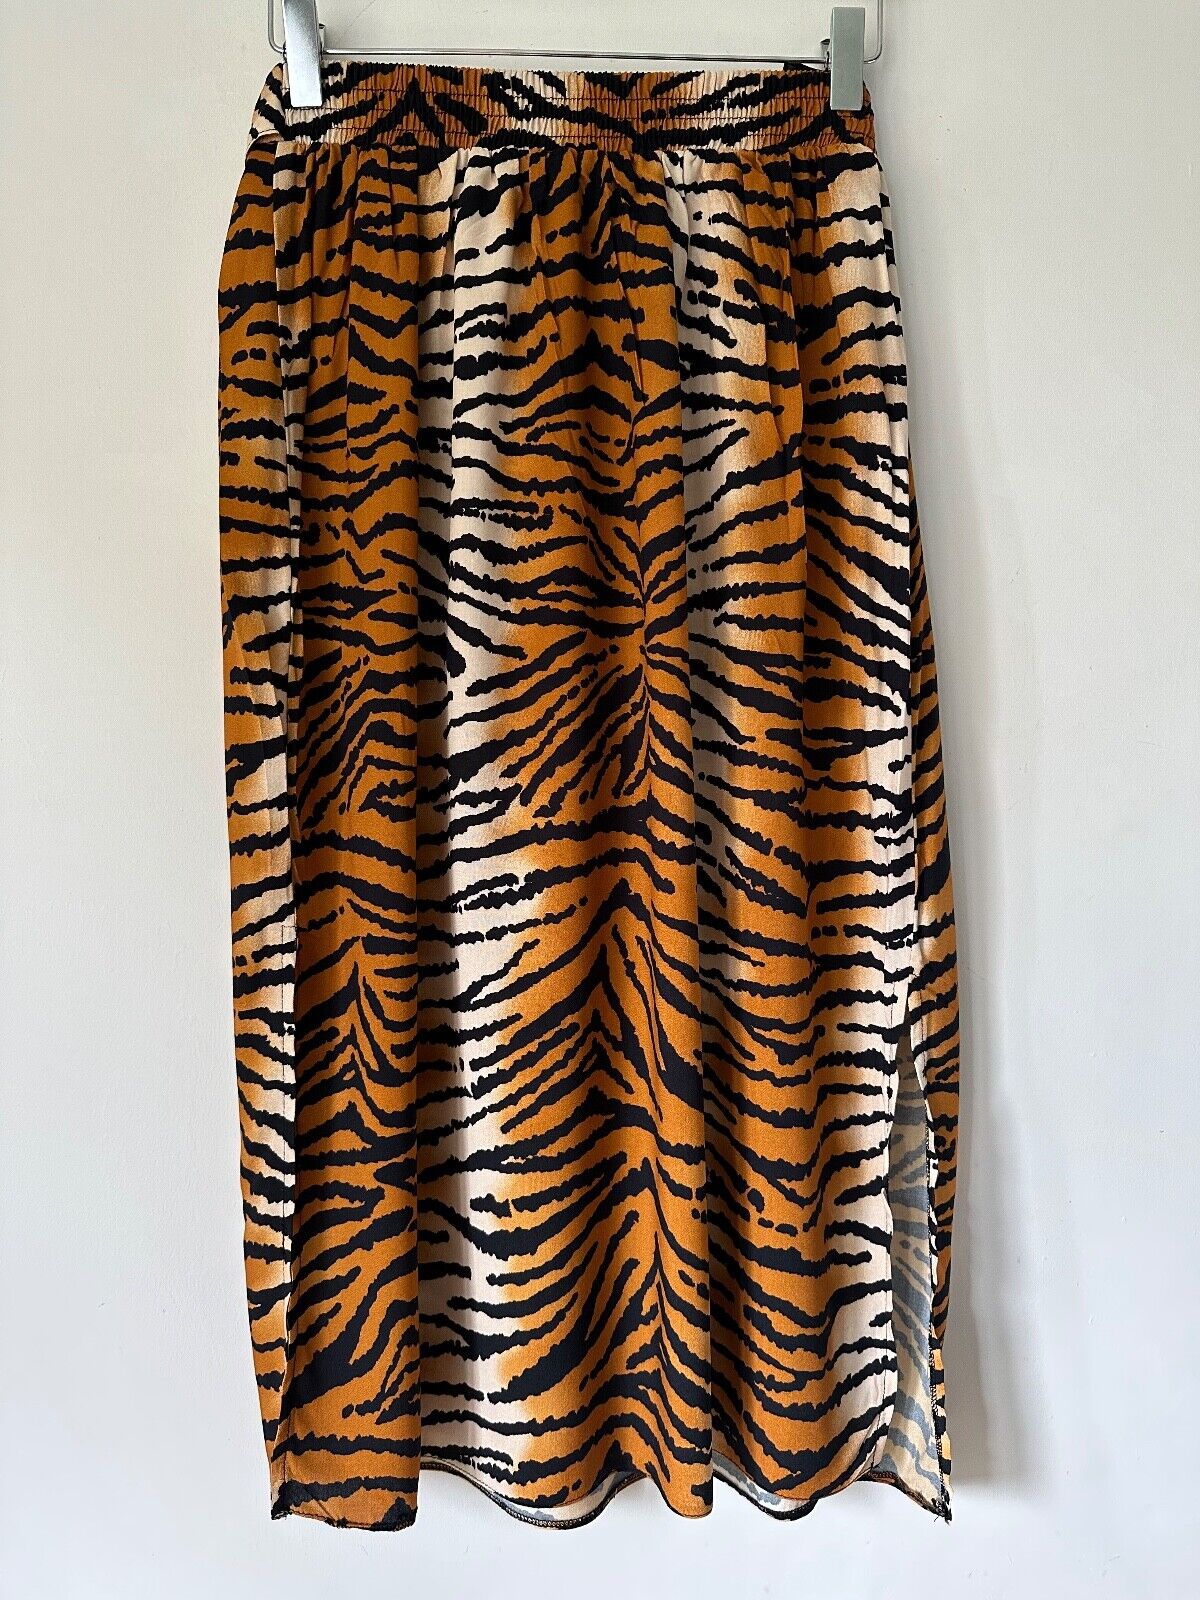 Dorothy Perkins Tiger Print Skirt Size 12 Side Slits Elastic Waist